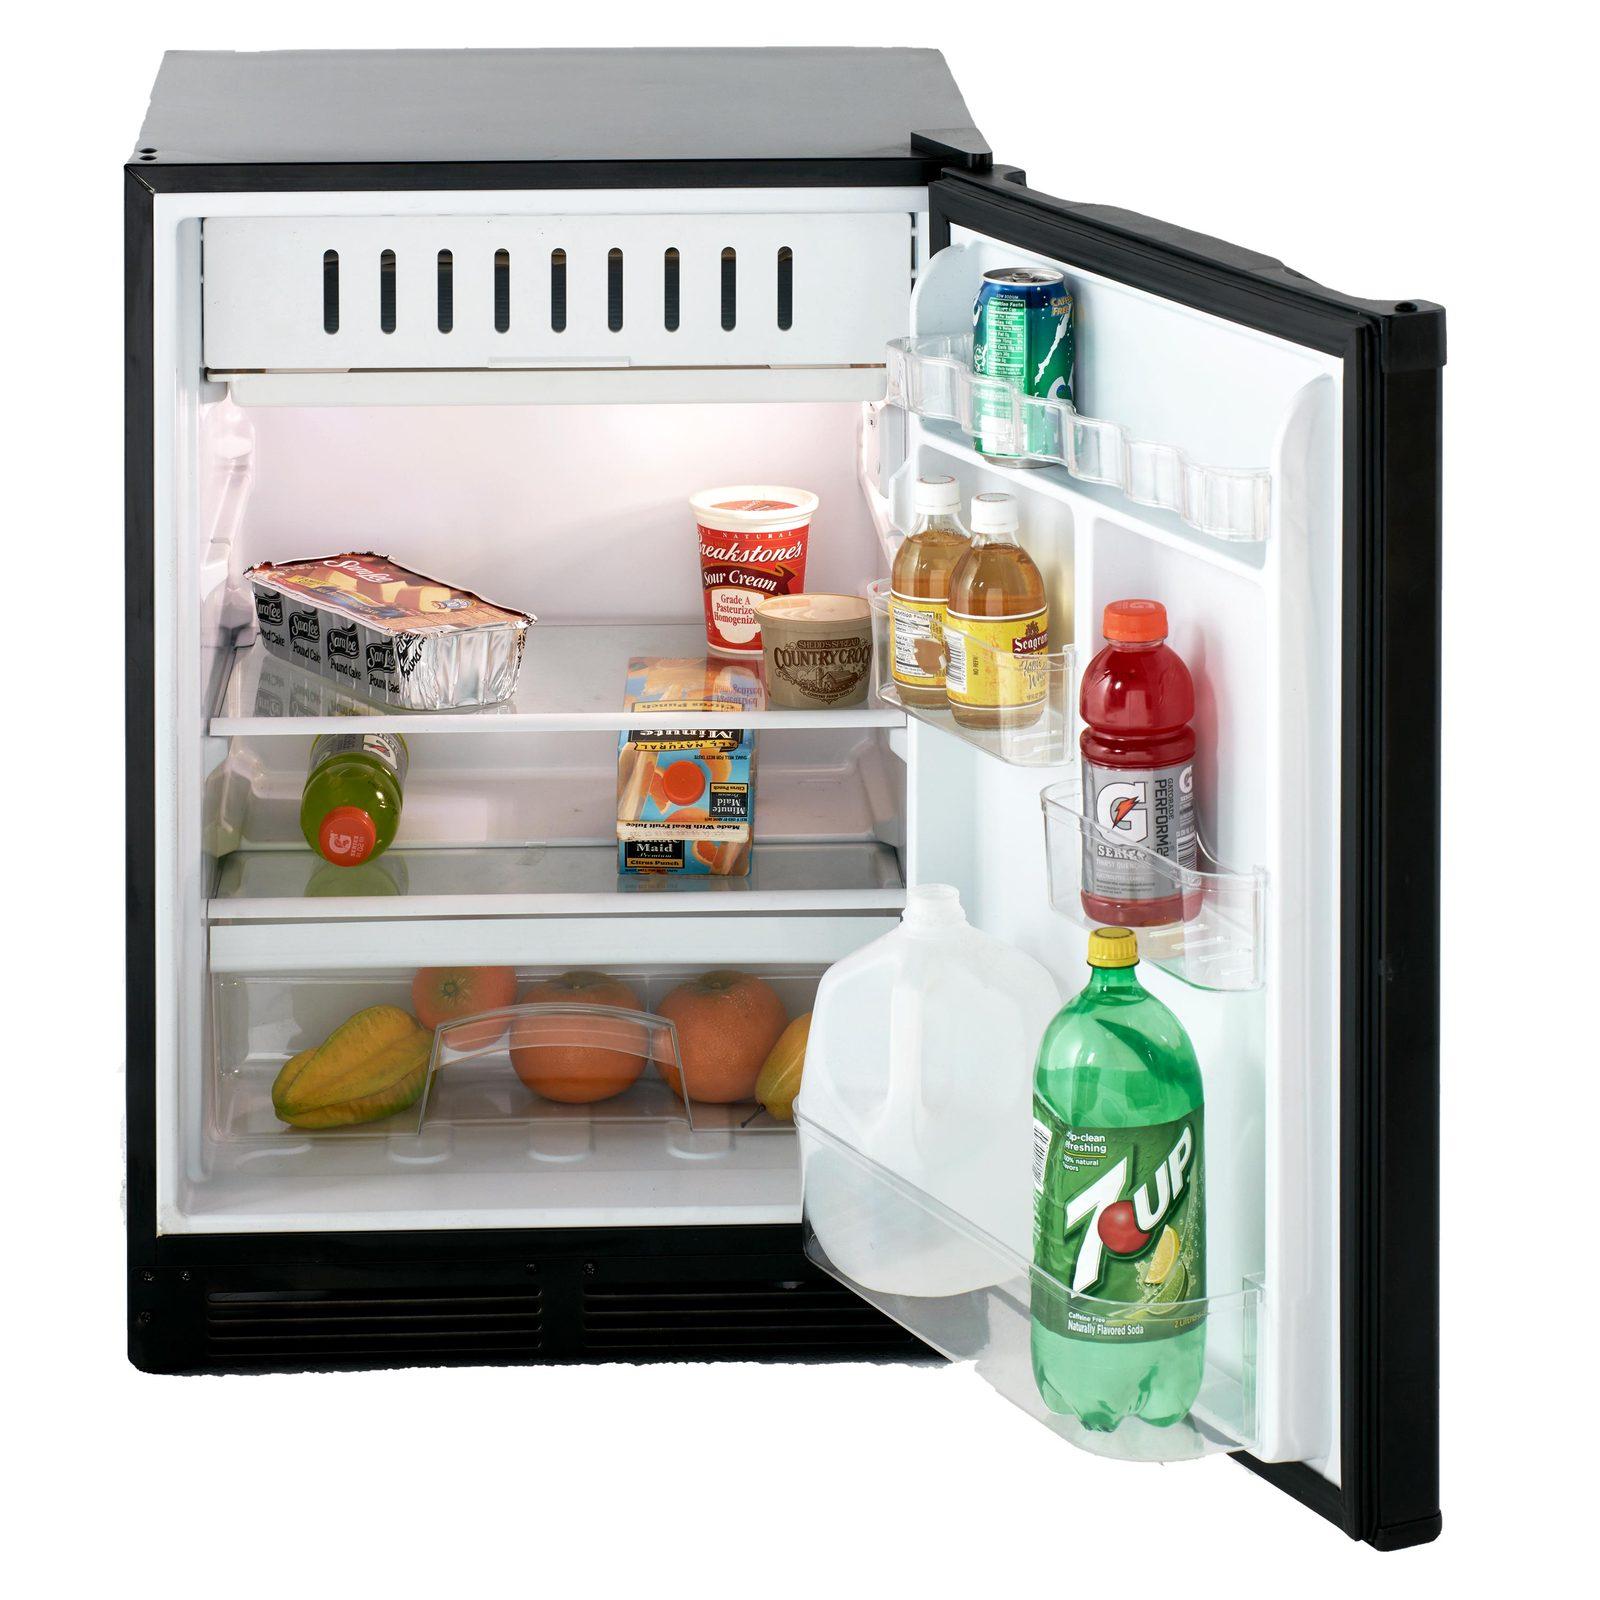 Avanti 5.2 cu. ft. Compact Refrigerator - Black / 5.2 cu. ft.